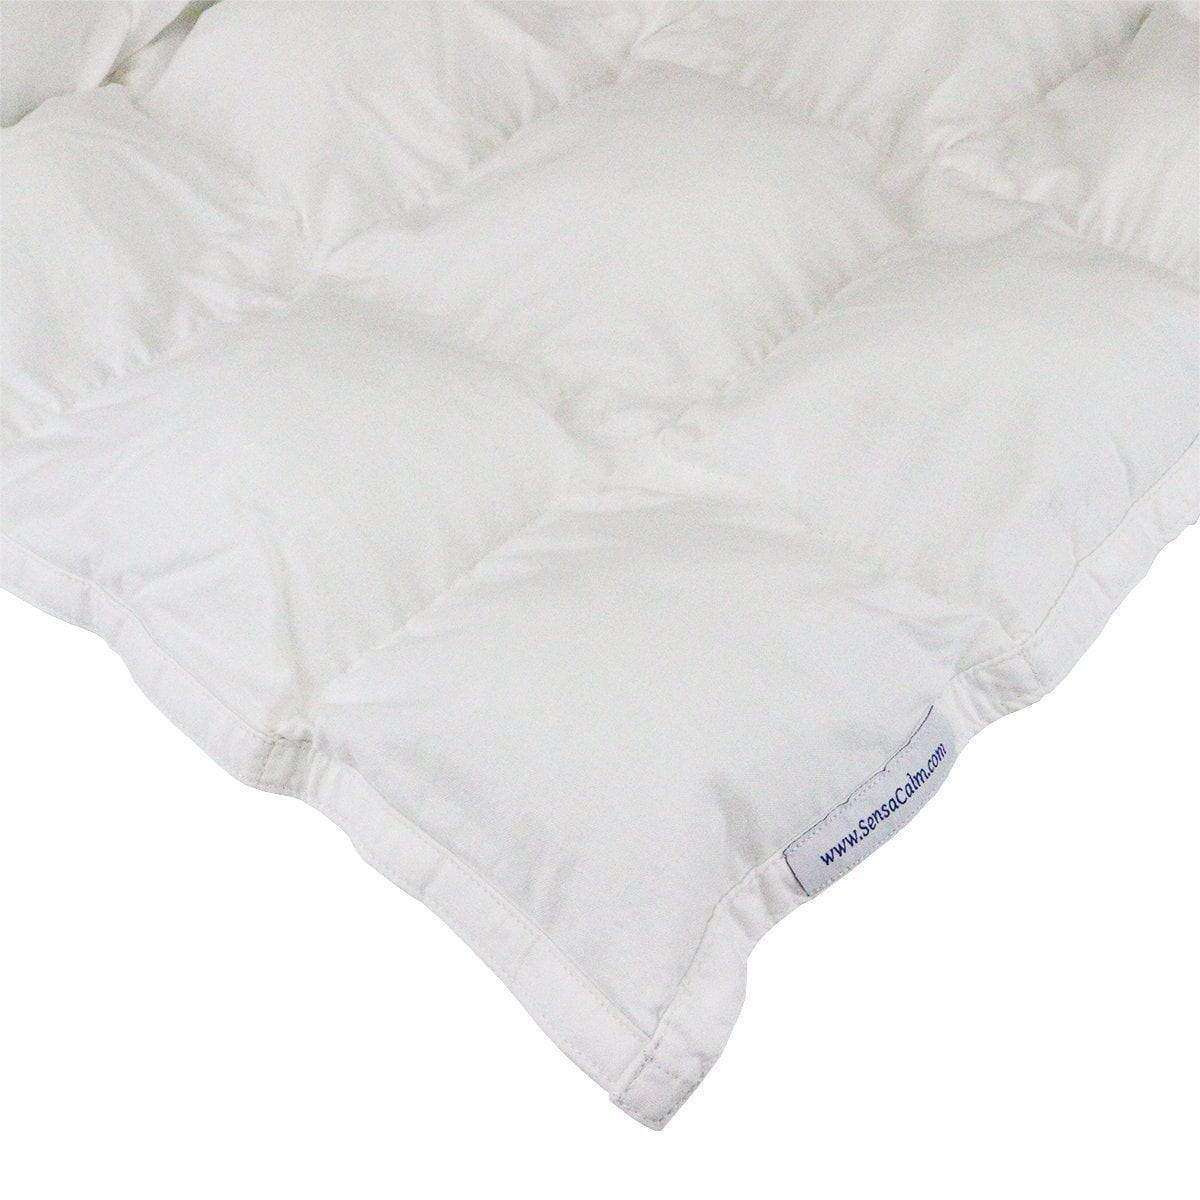 Custom Weighted Blanket - White